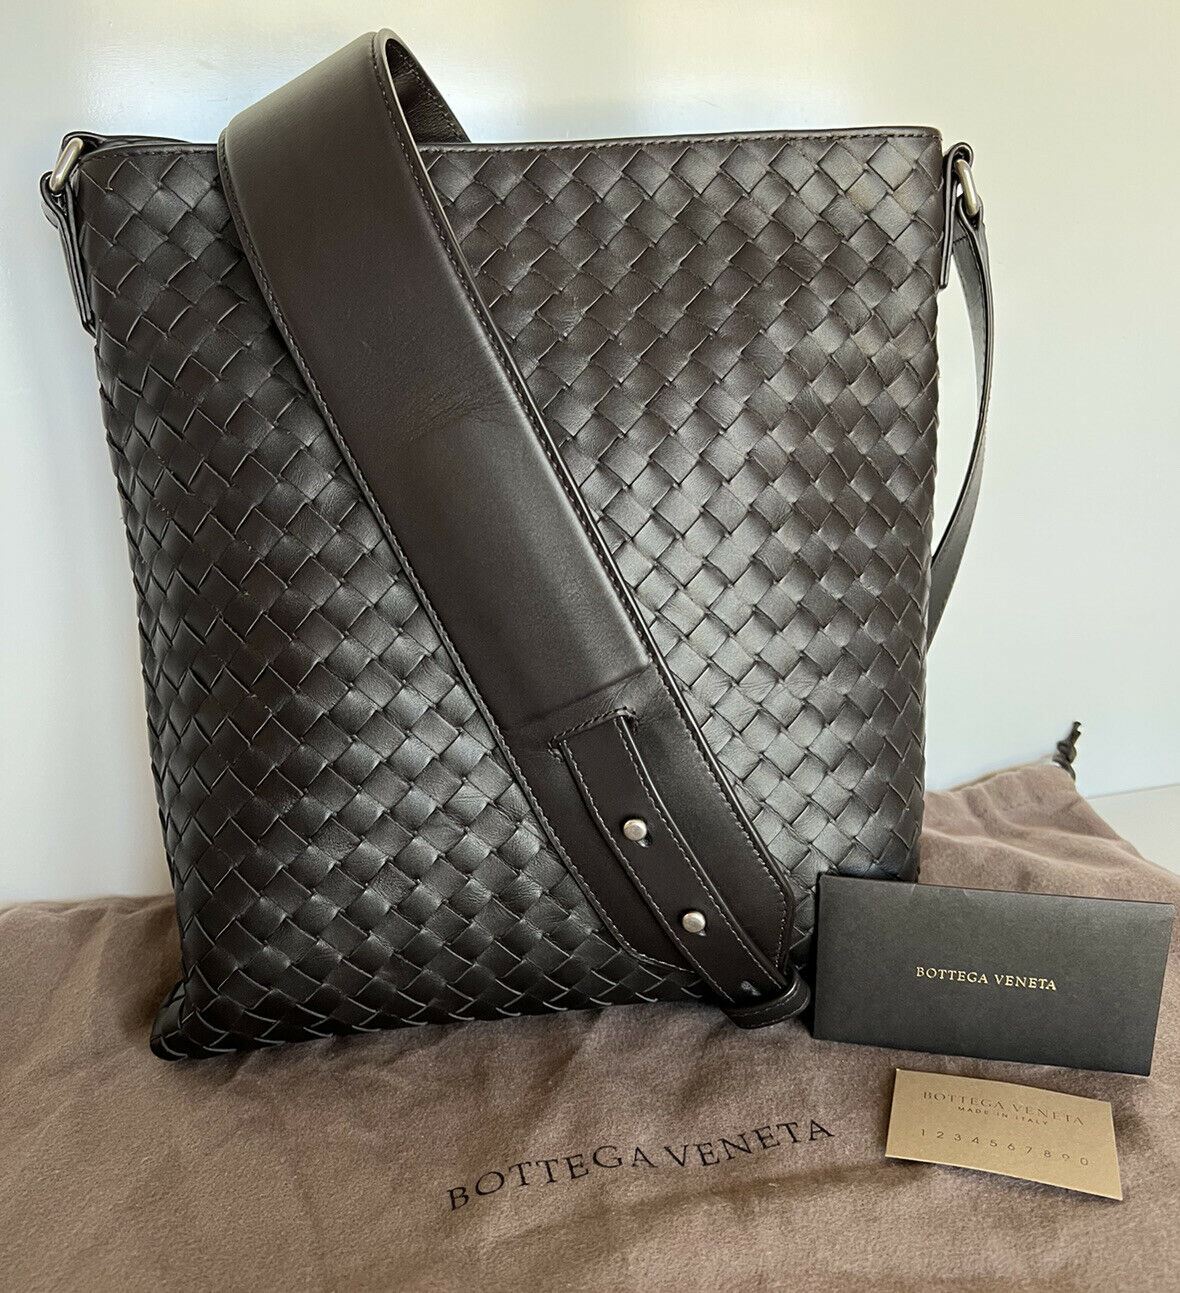 NWT $1850 Bottega Veneta Leather Intrecciato Expresso Crossbody Bag Italy 577534